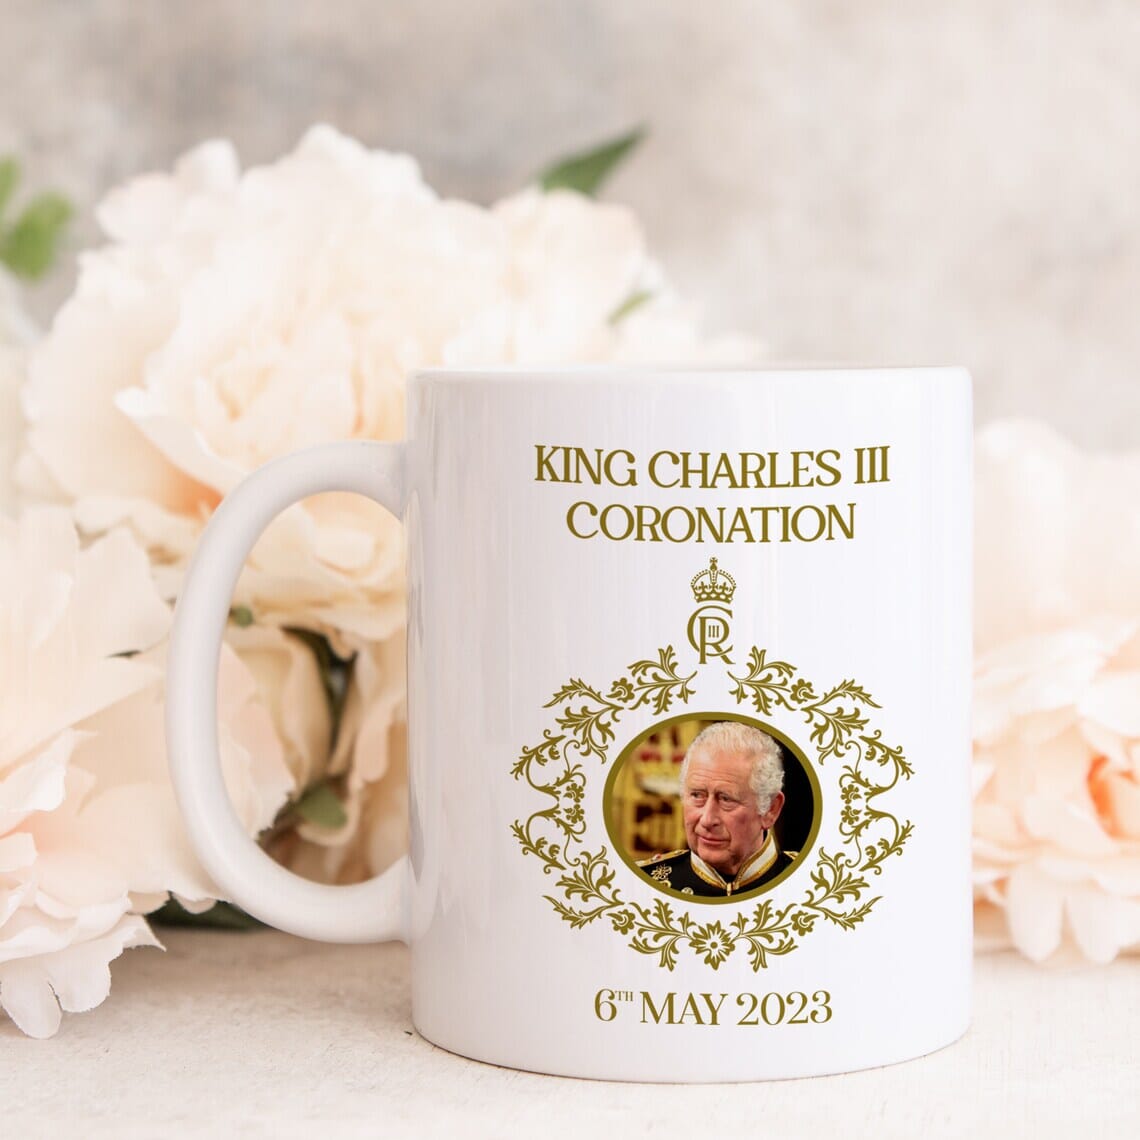 Coronation mug, HM King Charles III, God save the king, Commemorative cup Celebration gift